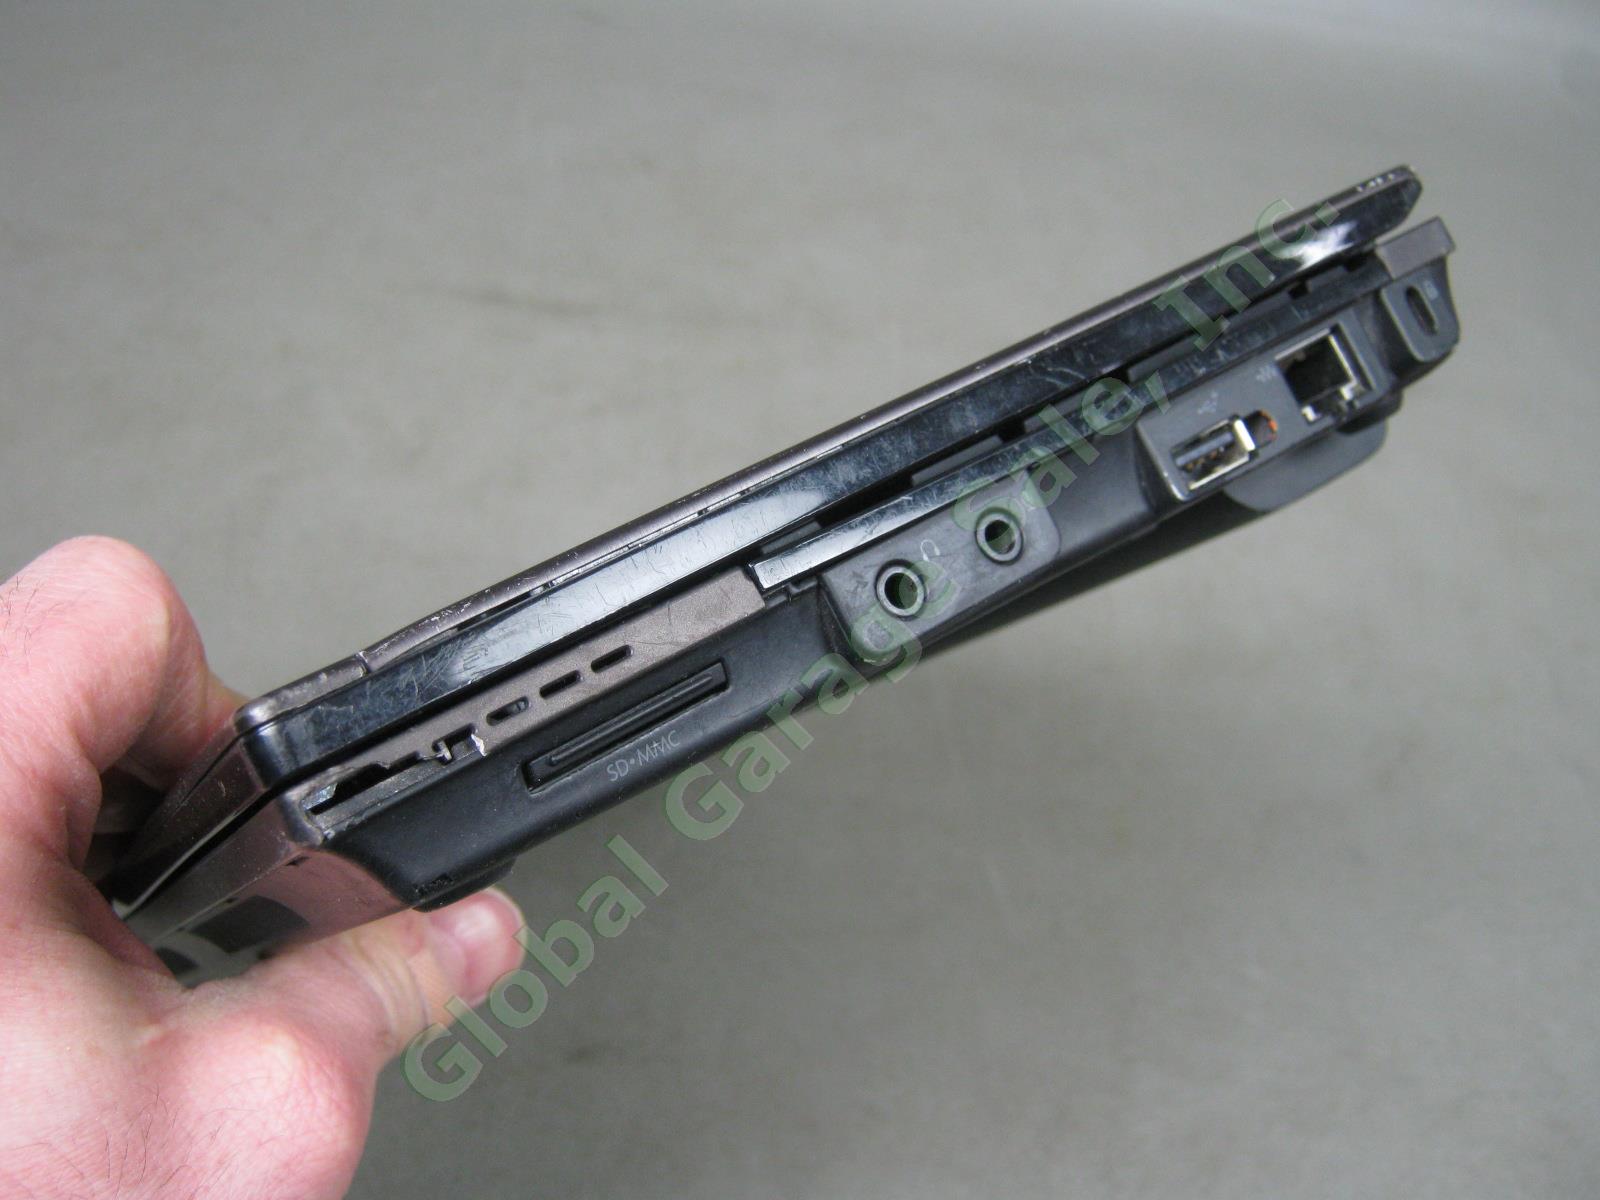 HP Mini 5103 10.1" Netbook Laptop Intel Atom 1.83GHz 2GB RAM 160GB HDD Windows 7 3